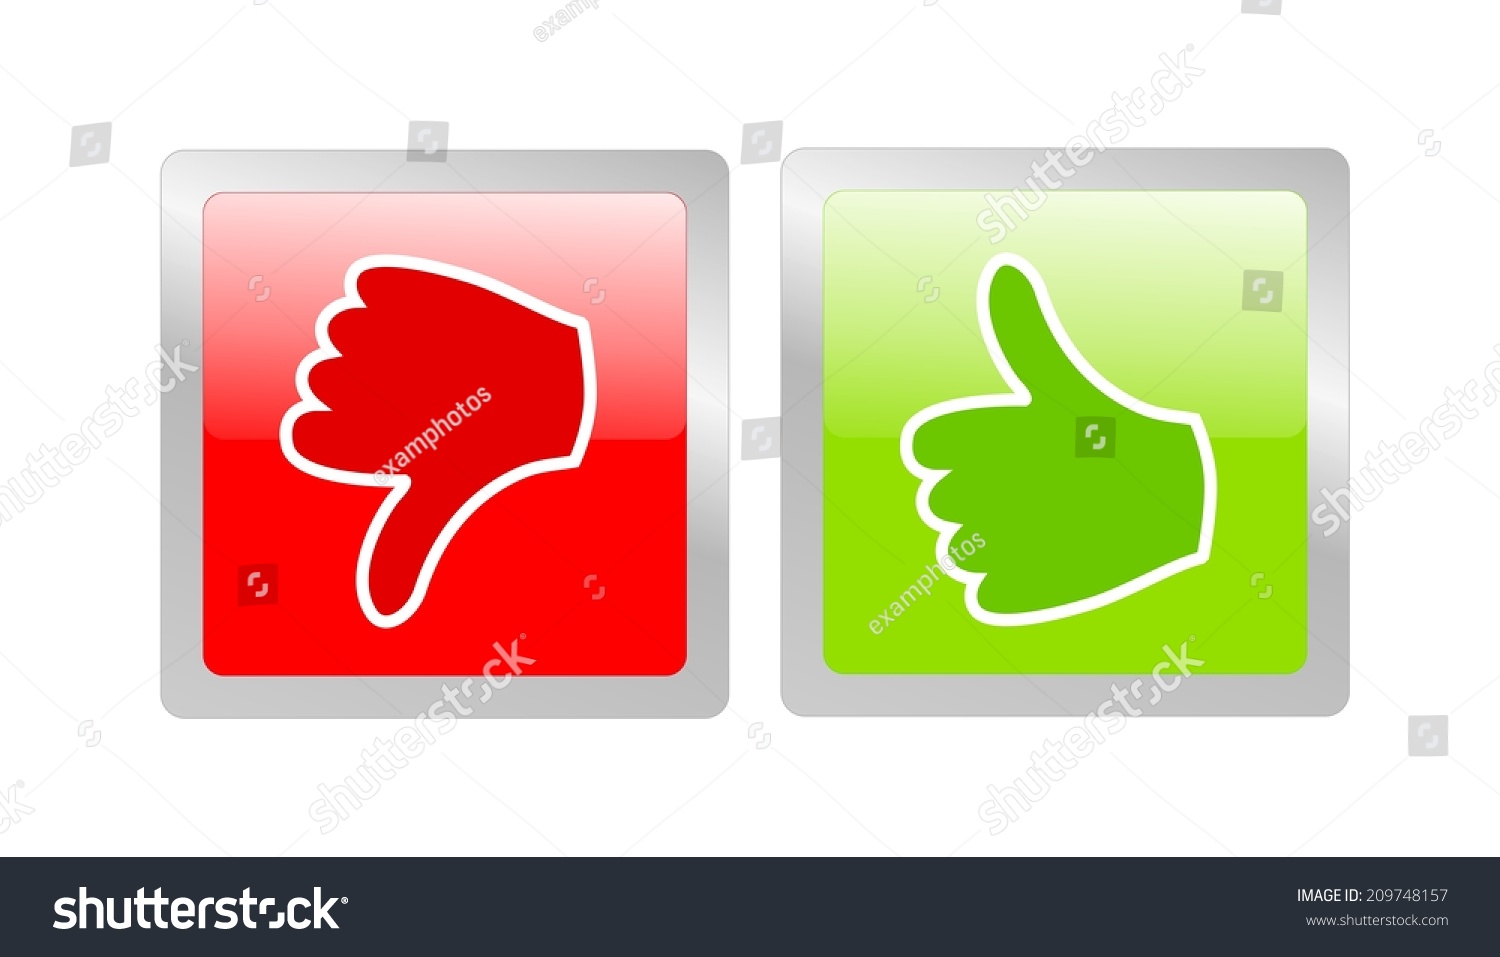 Dislike, Hands, Gestures, Hands And Gestures, Finger icon